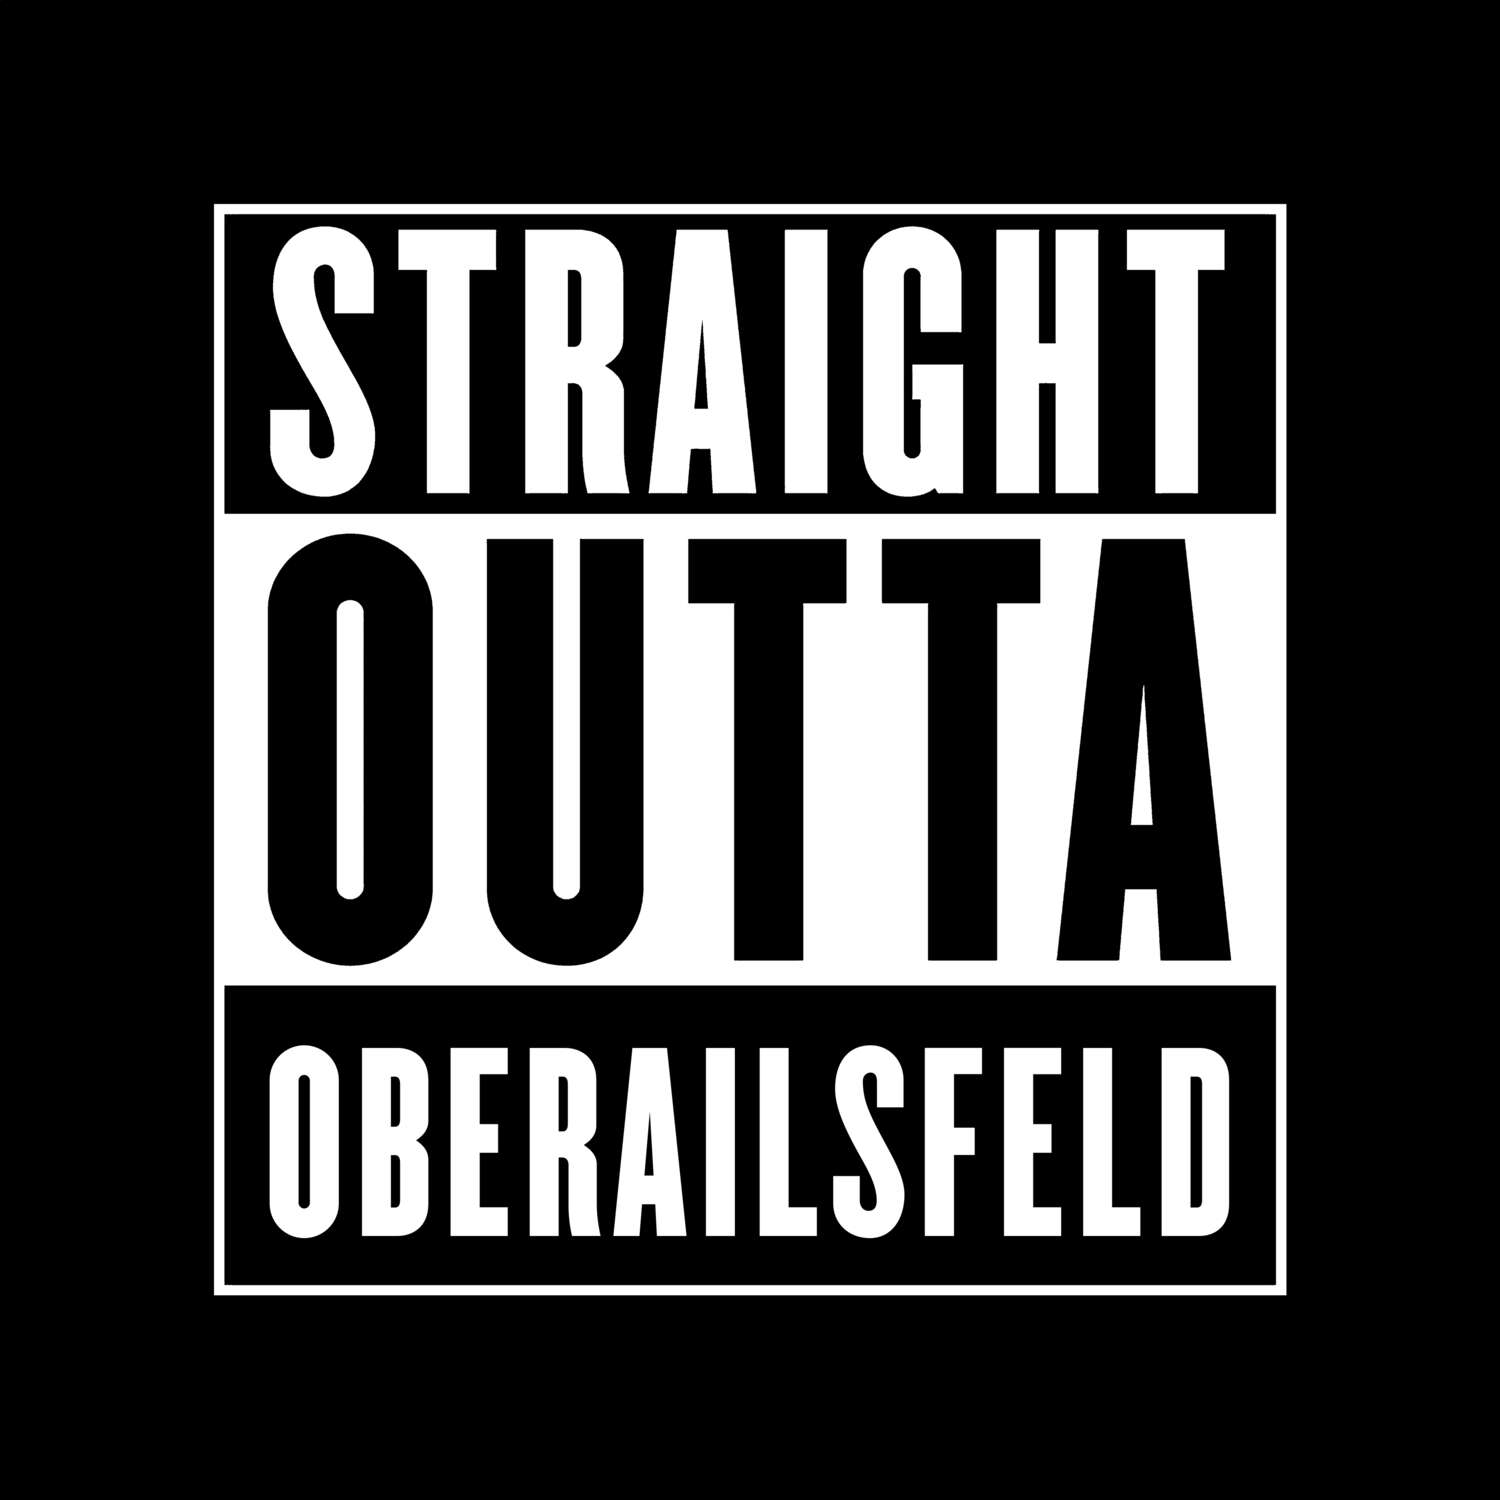 Oberailsfeld T-Shirt »Straight Outta«